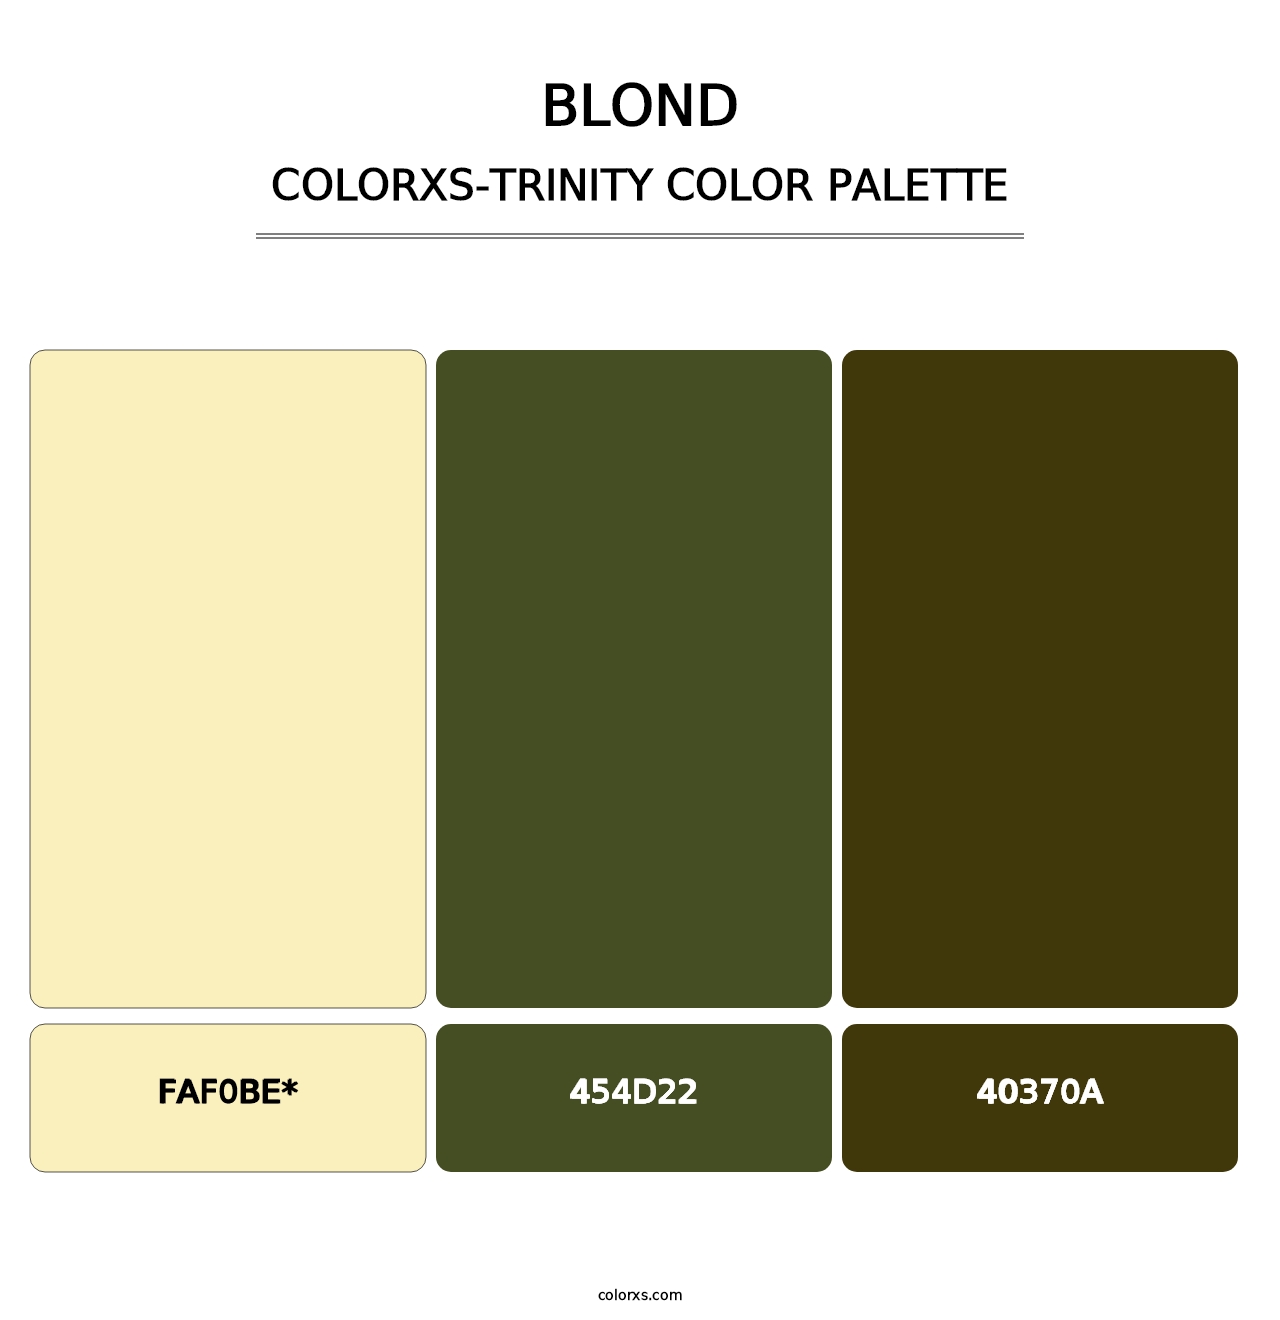 Blond - Colorxs Trinity Palette